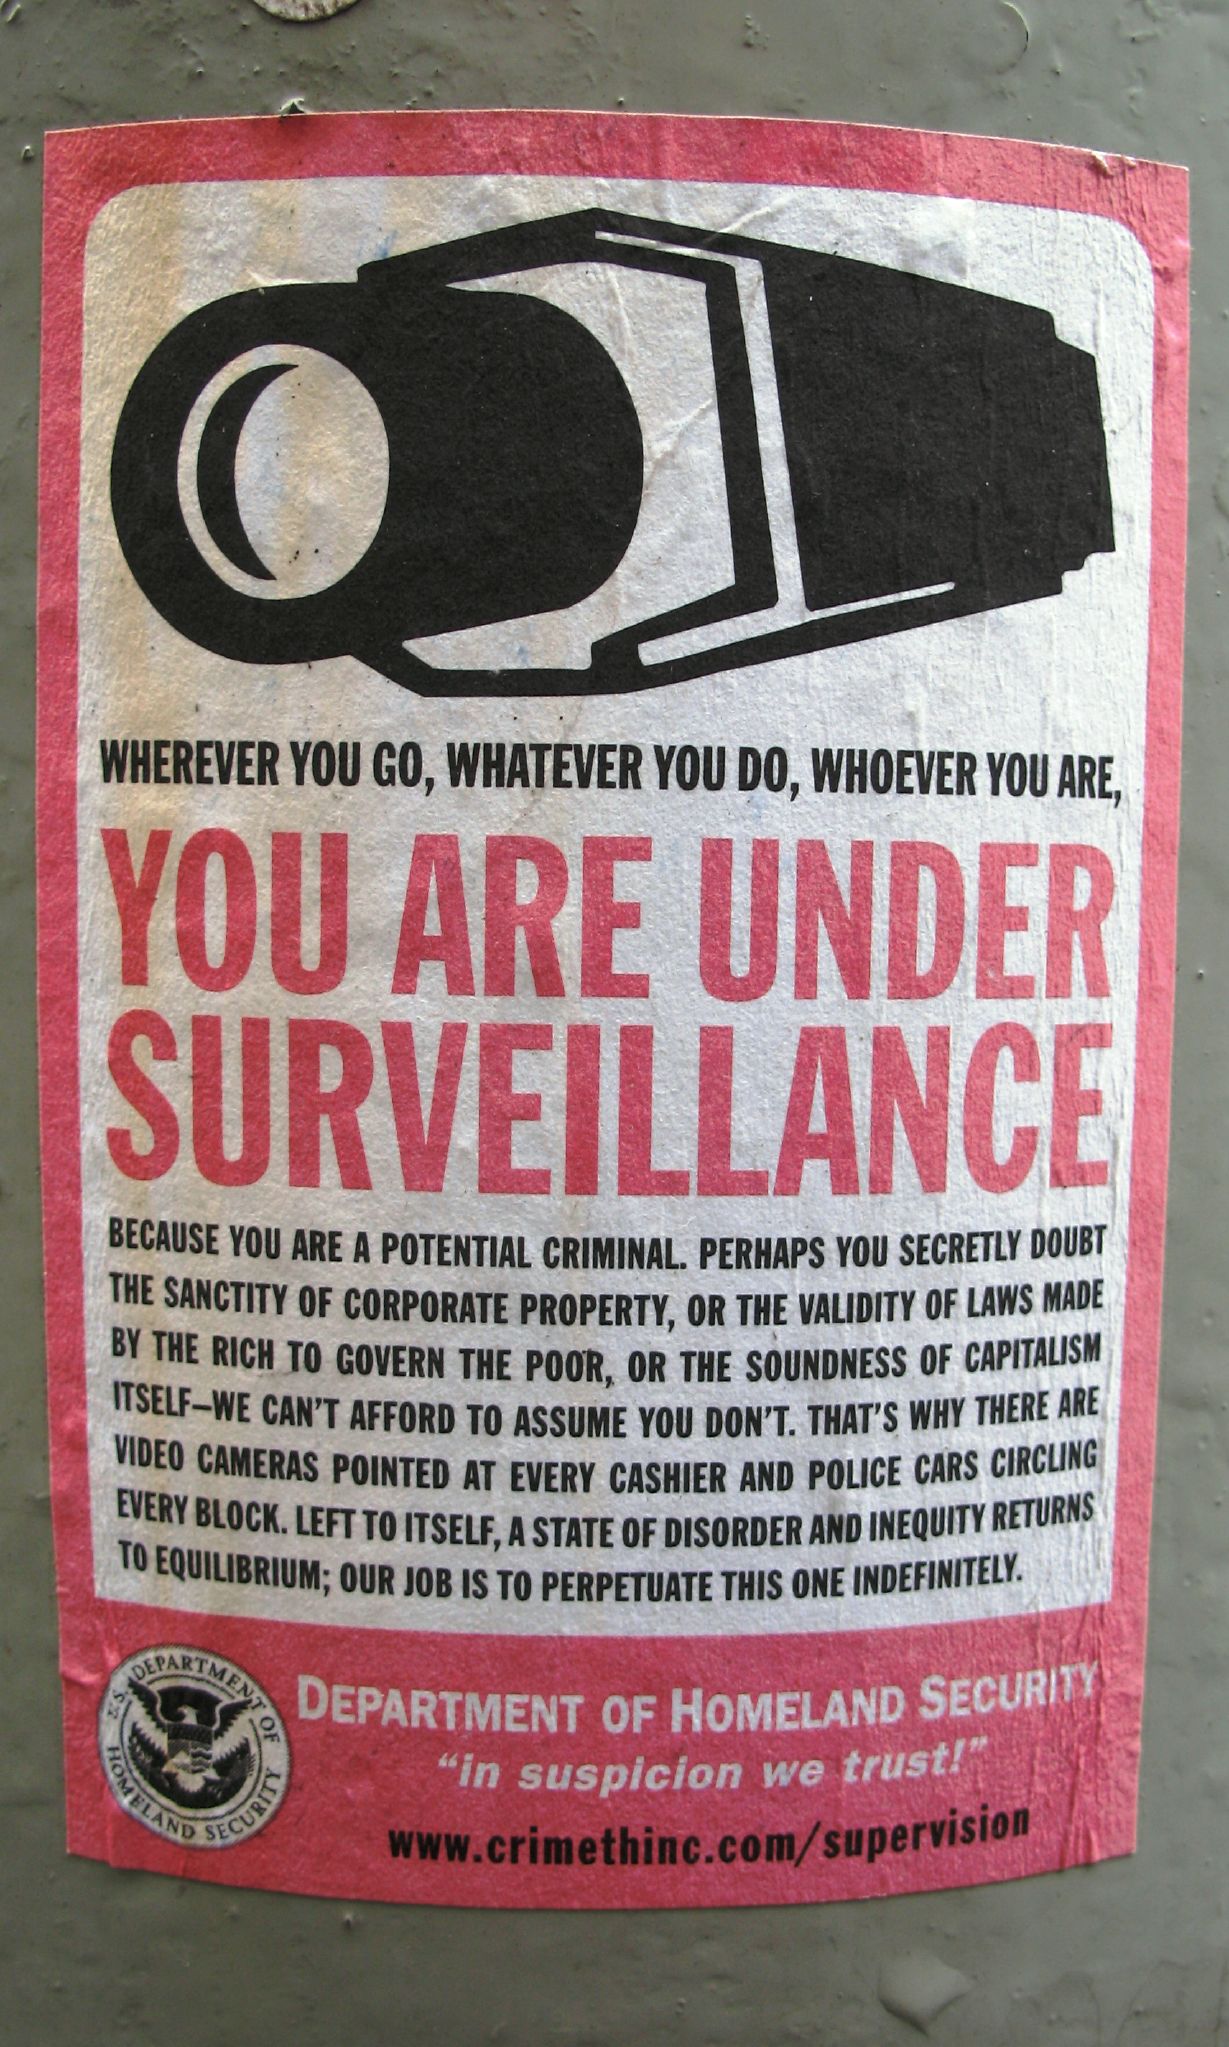 You are under surveillance